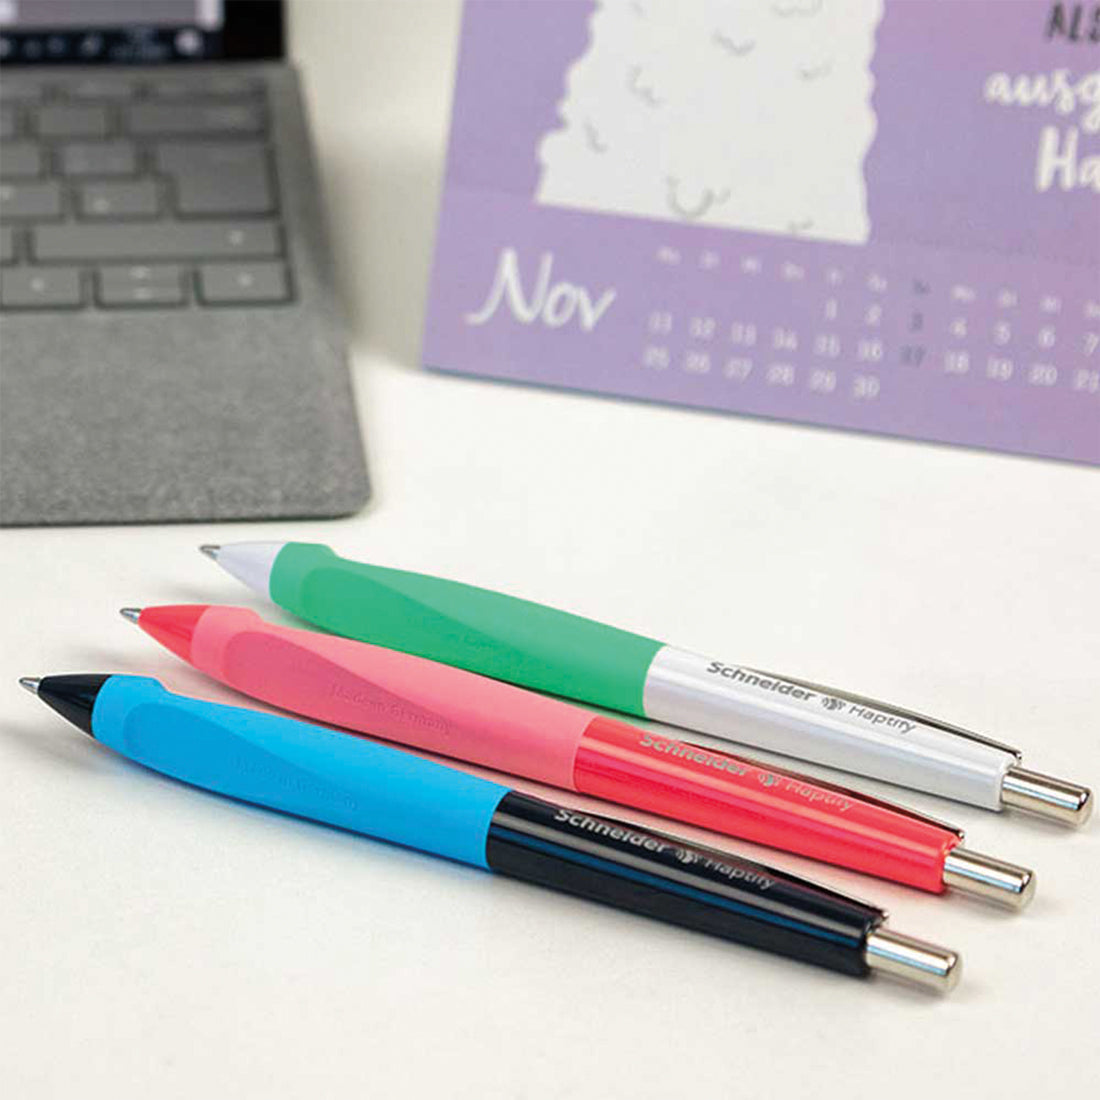 Haptify Ballpoint Pens M, Box of 10#colour_white-mint